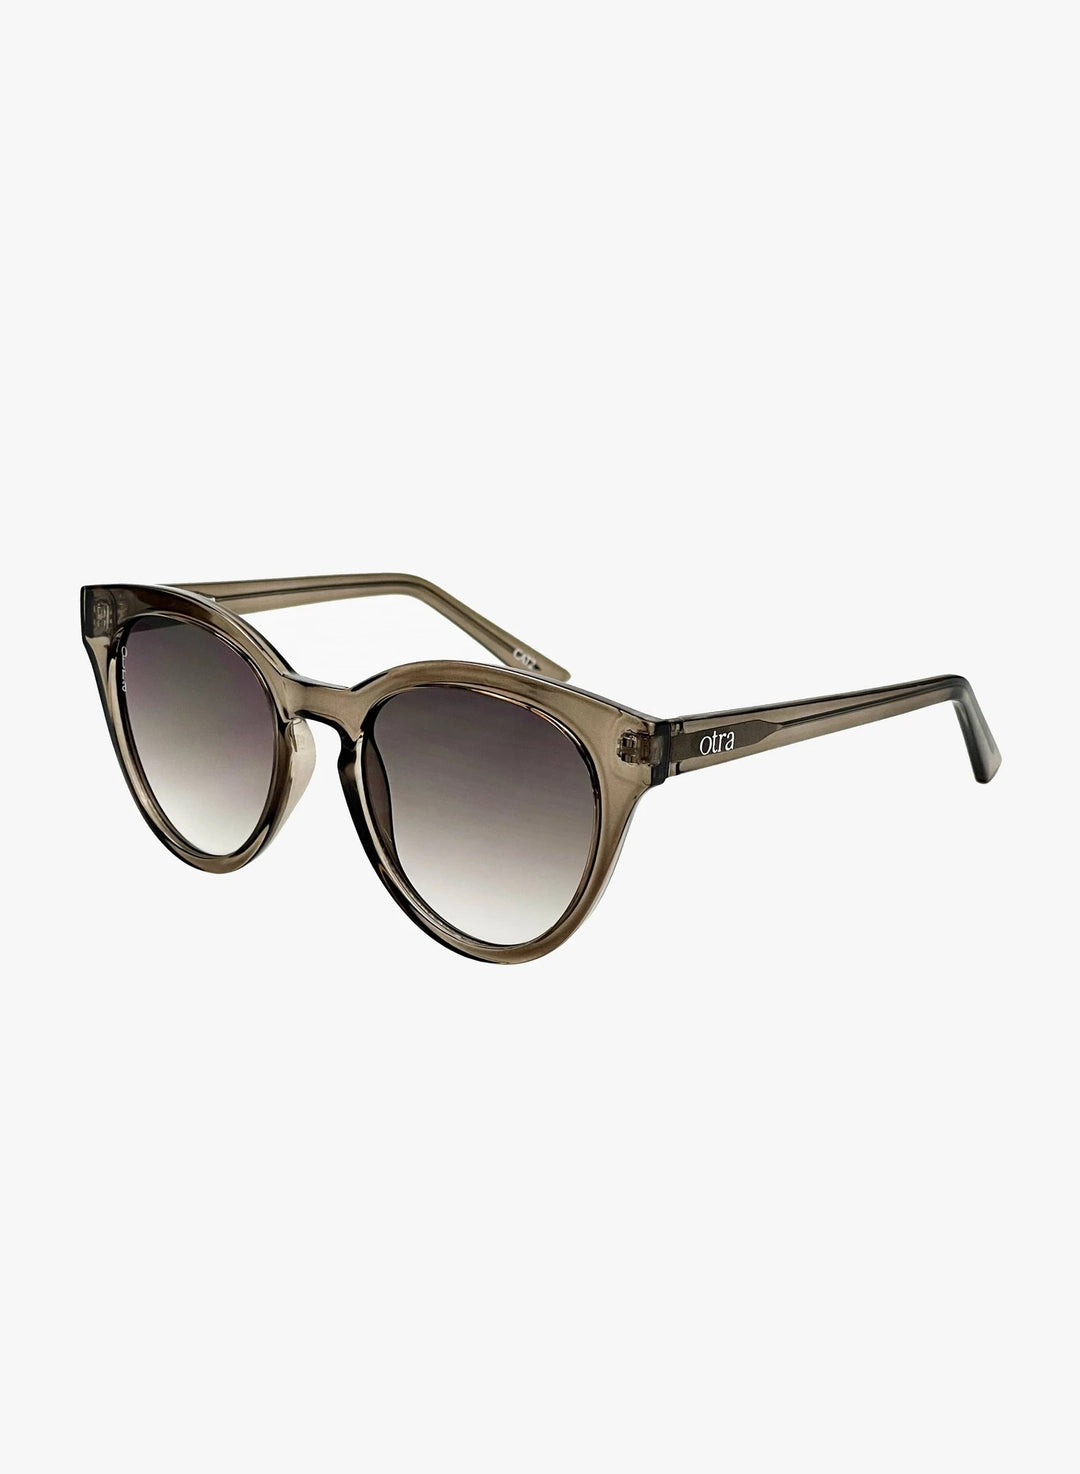 Otra Eyewear - Lily Sunglasses in Olive